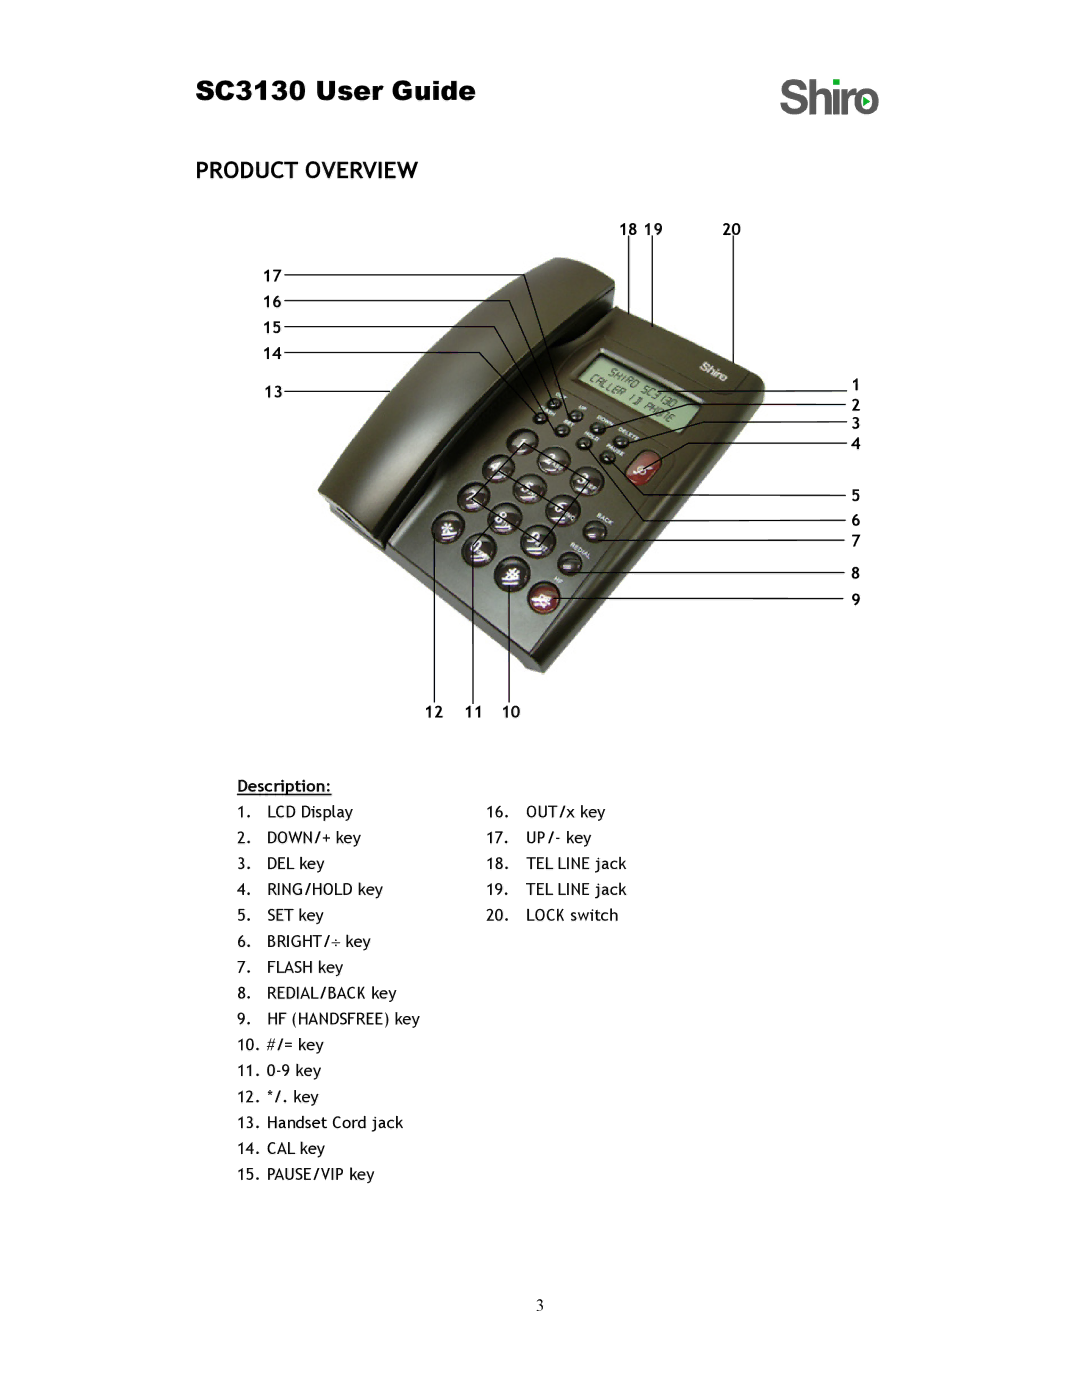 Shiro SC3130 user manual Product Overview, Description 